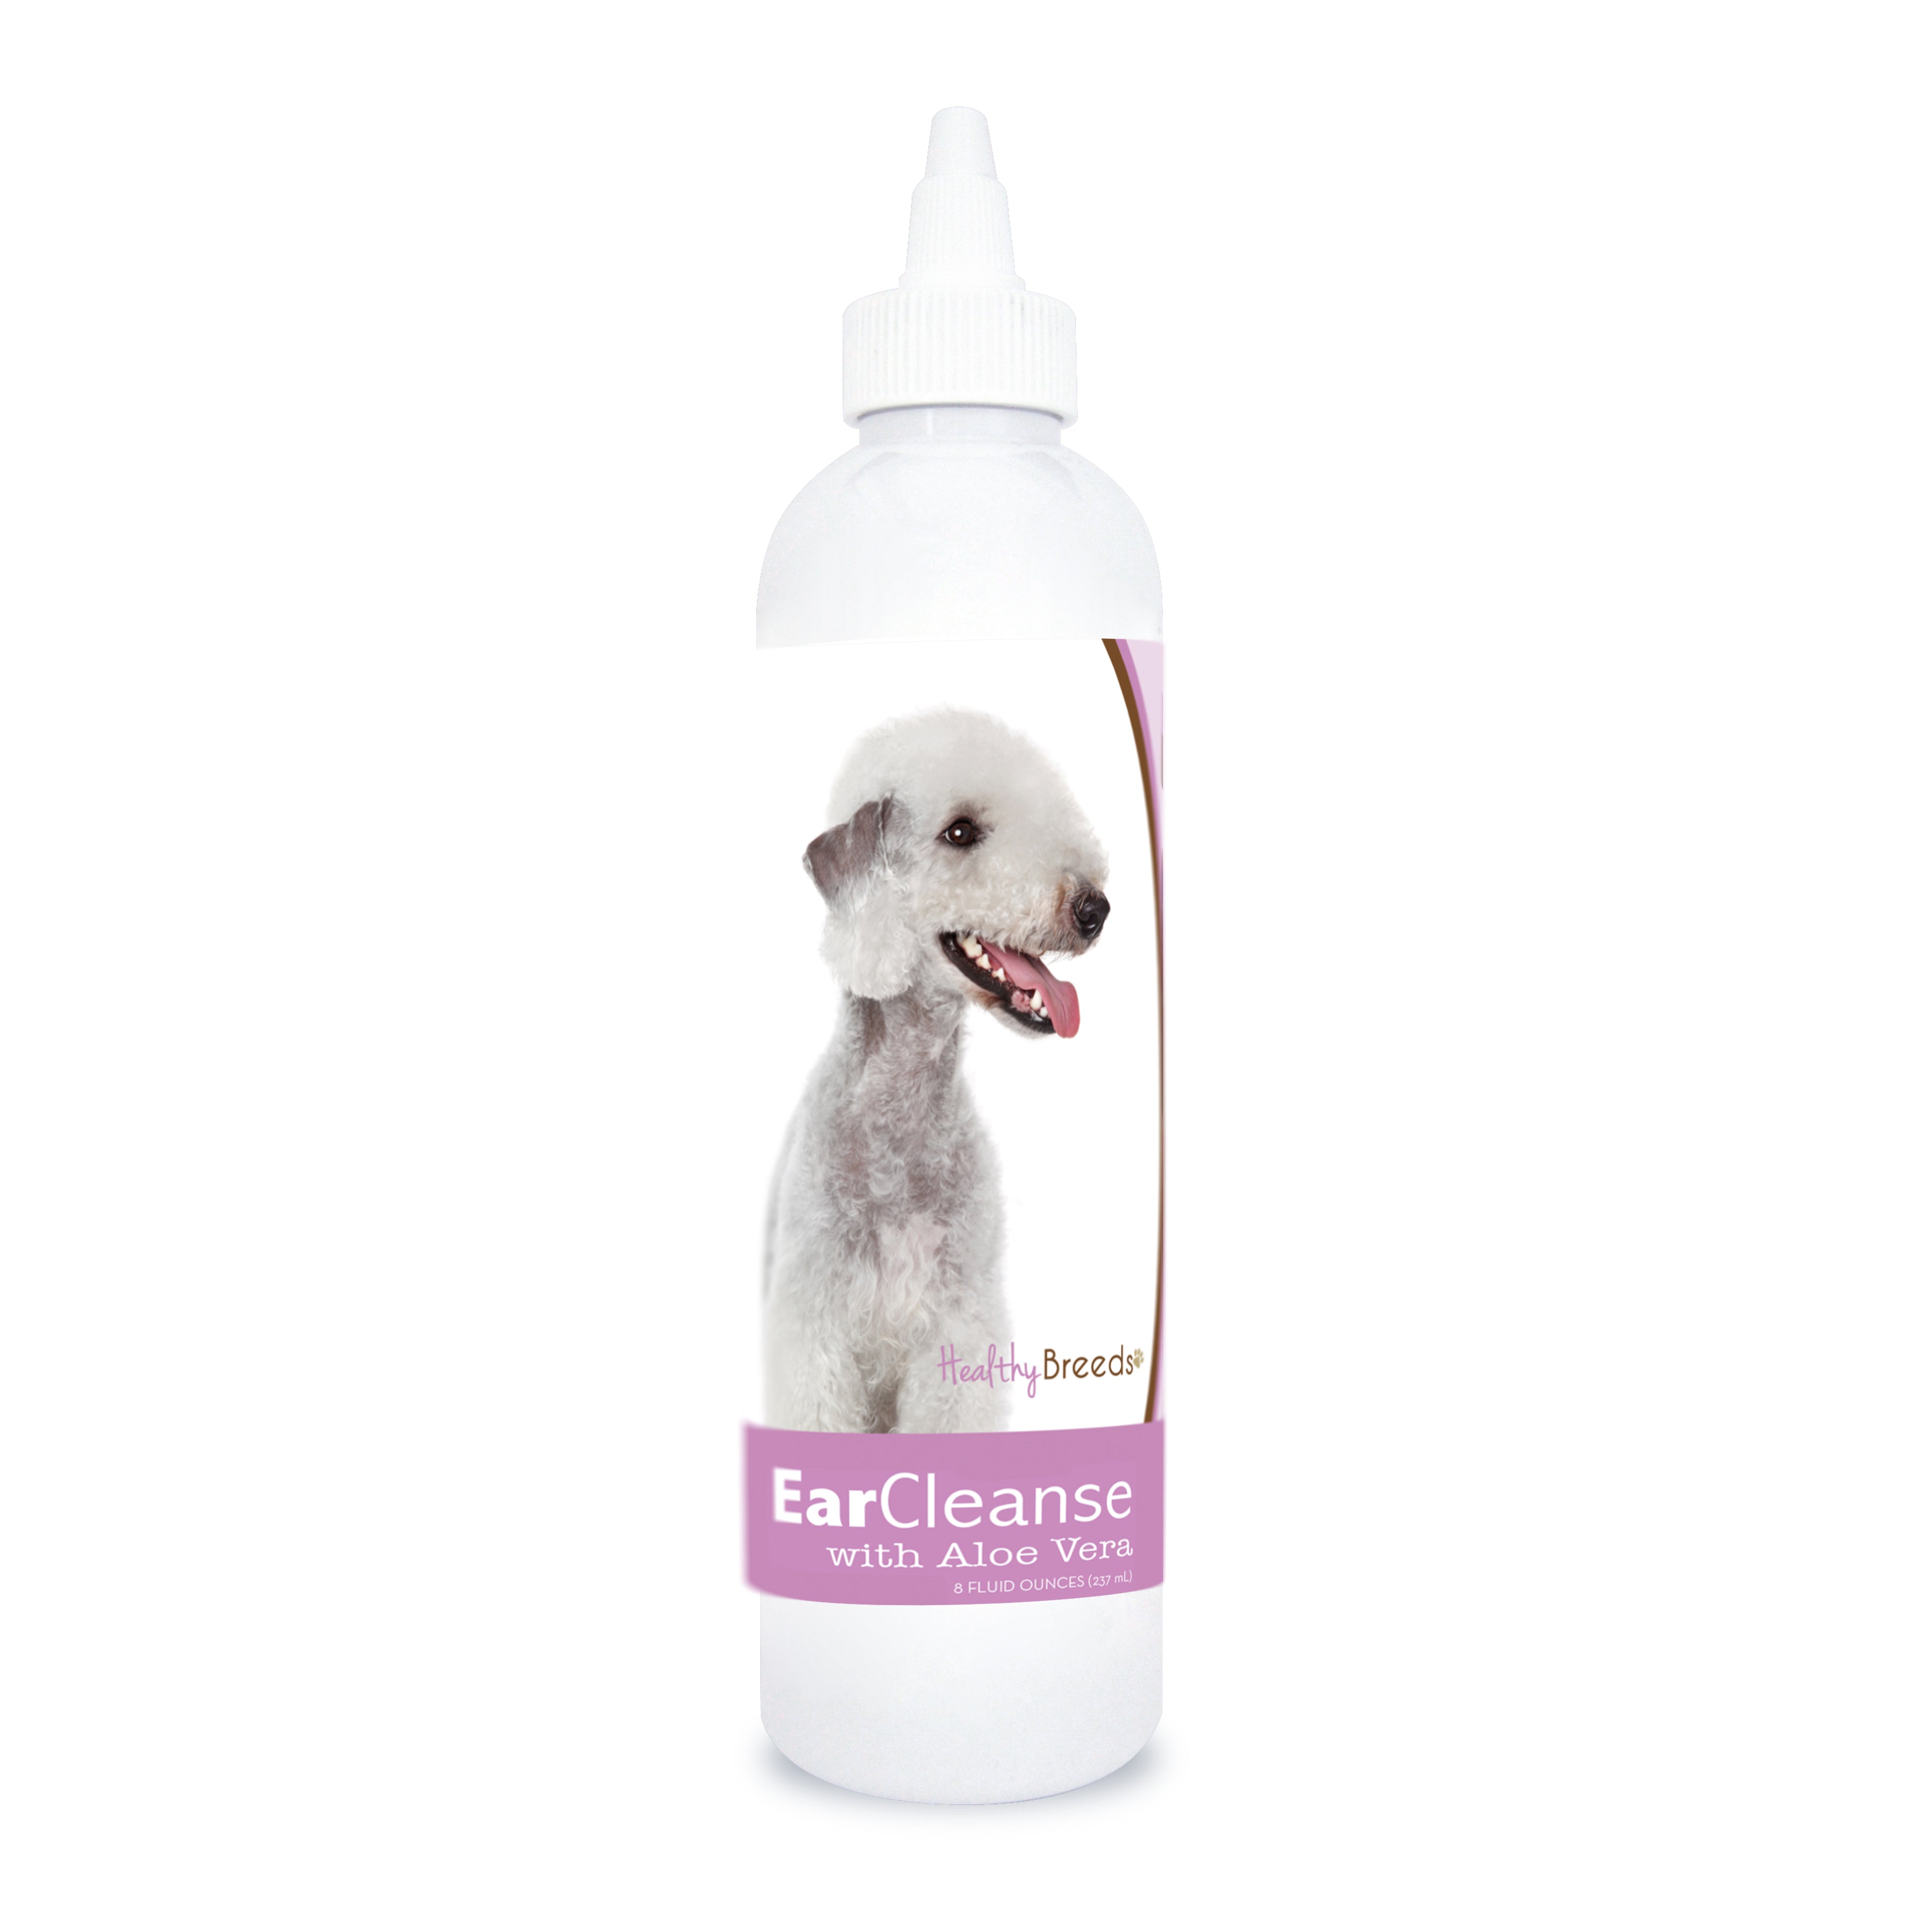 Bedlington Terrier Ear Cleanse with Aloe Vera Sweet Pea and Vanilla 8 oz